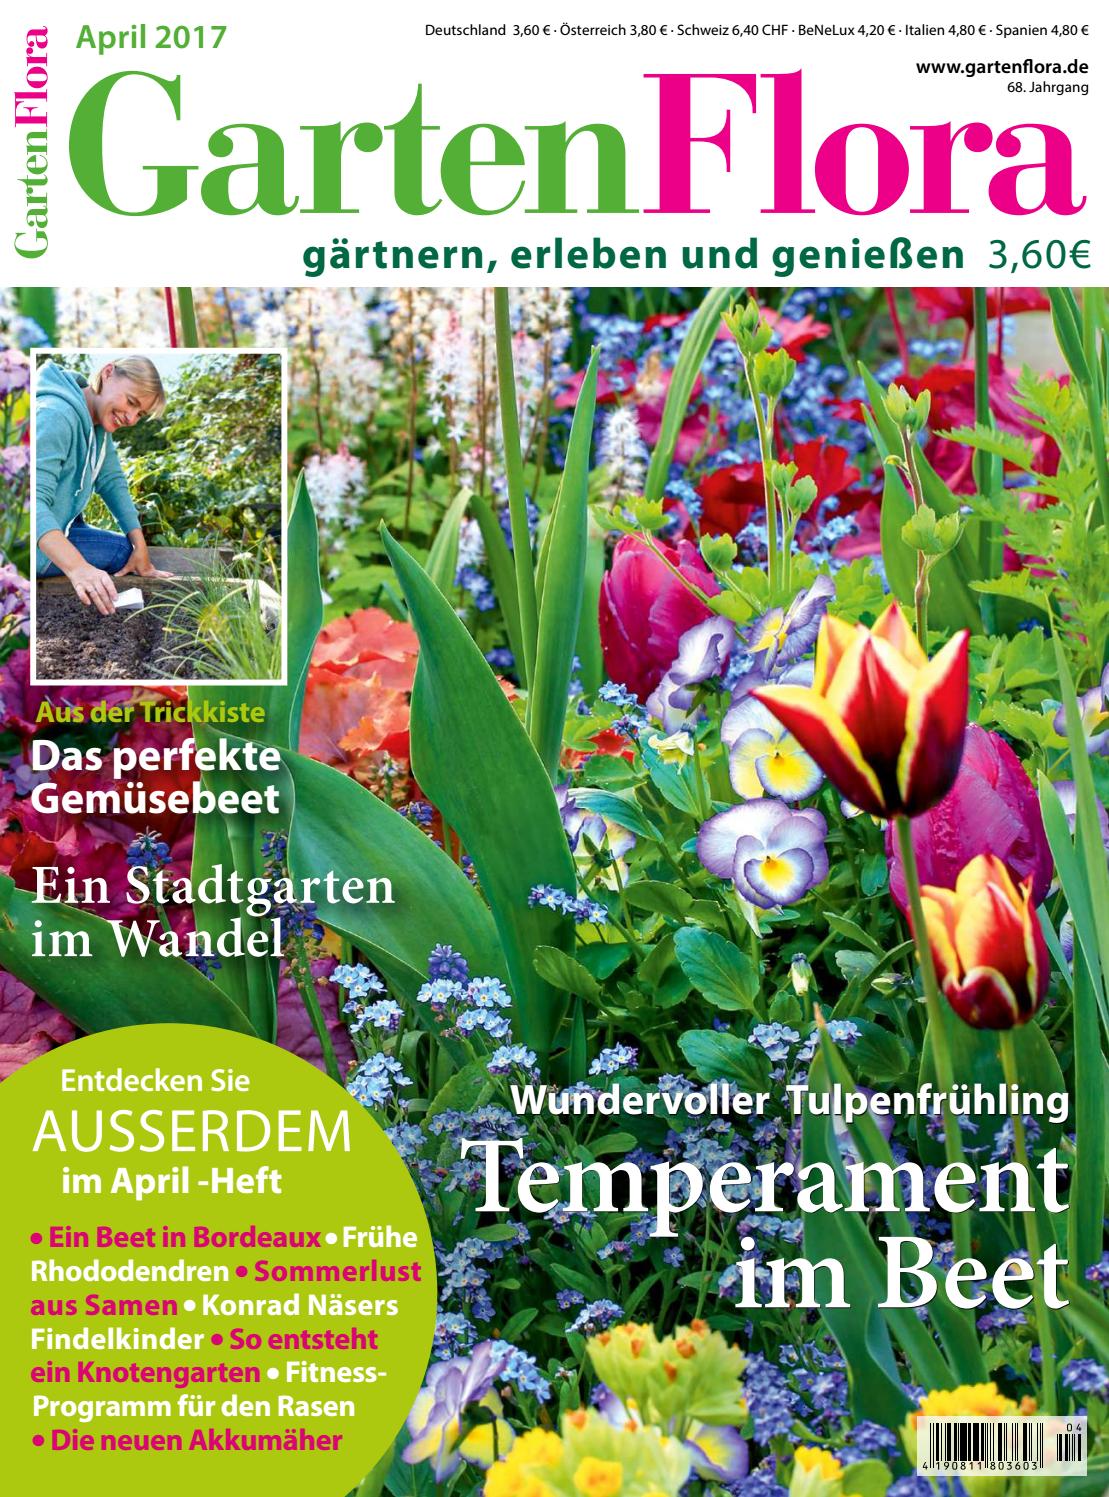 Garten Planen Online Inspirierend Cfcfcfcfecefcefy by Elcicario43 issuu